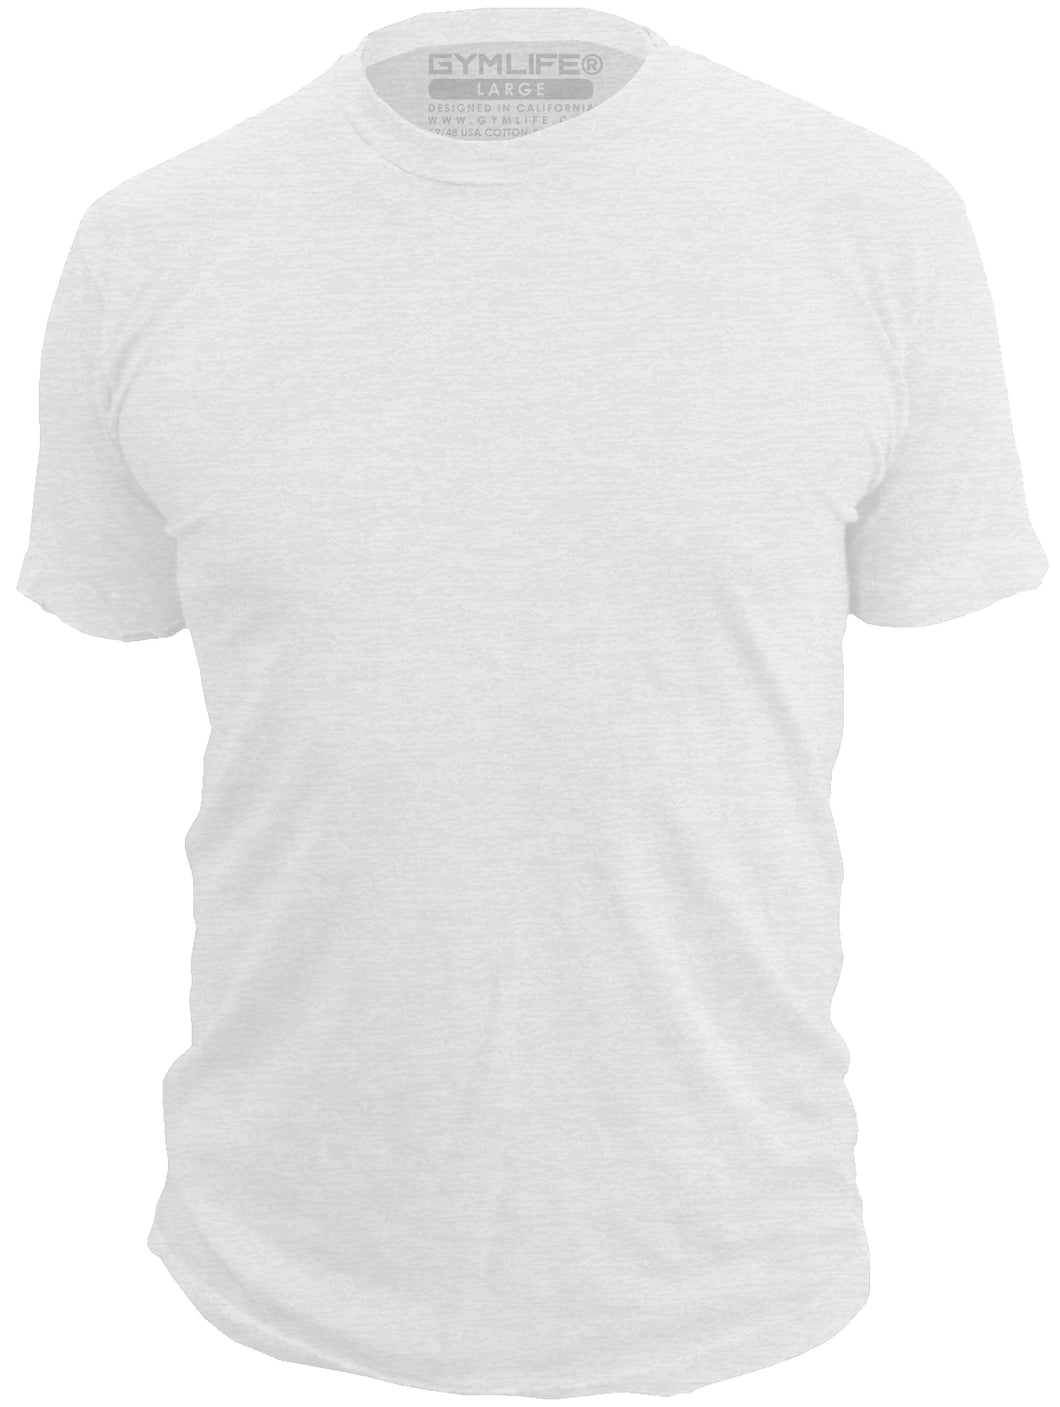 GYM LIFE - BLANK - Mens Athletic 52/48 Premium T-Shirt, Made of USA, White